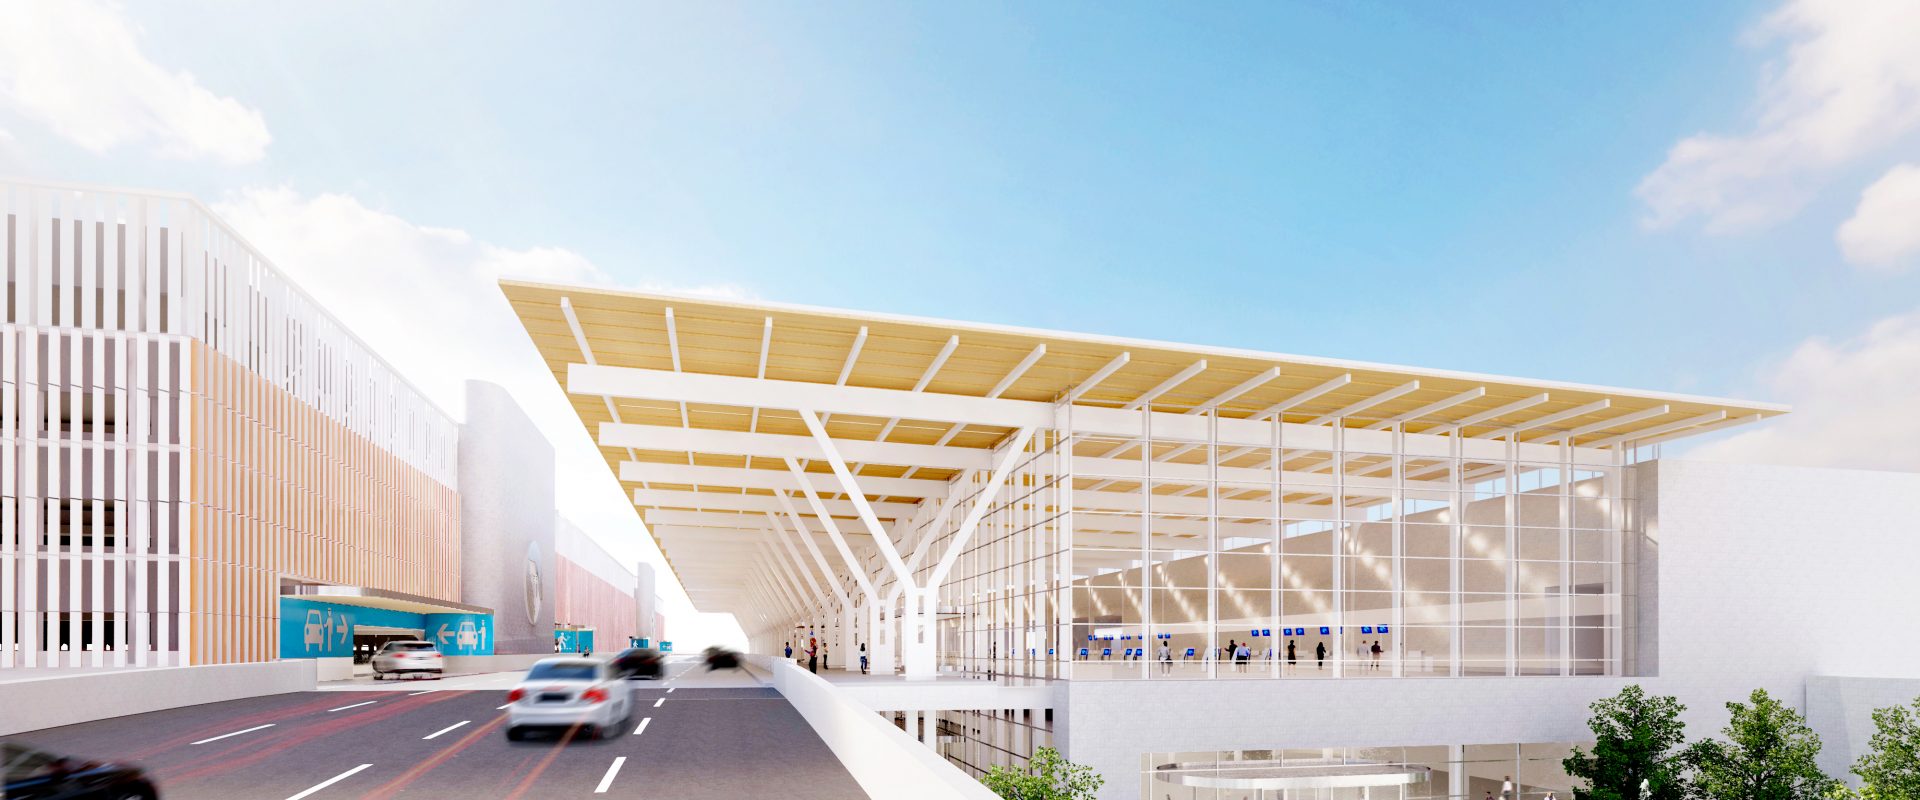 kansas city new international airport